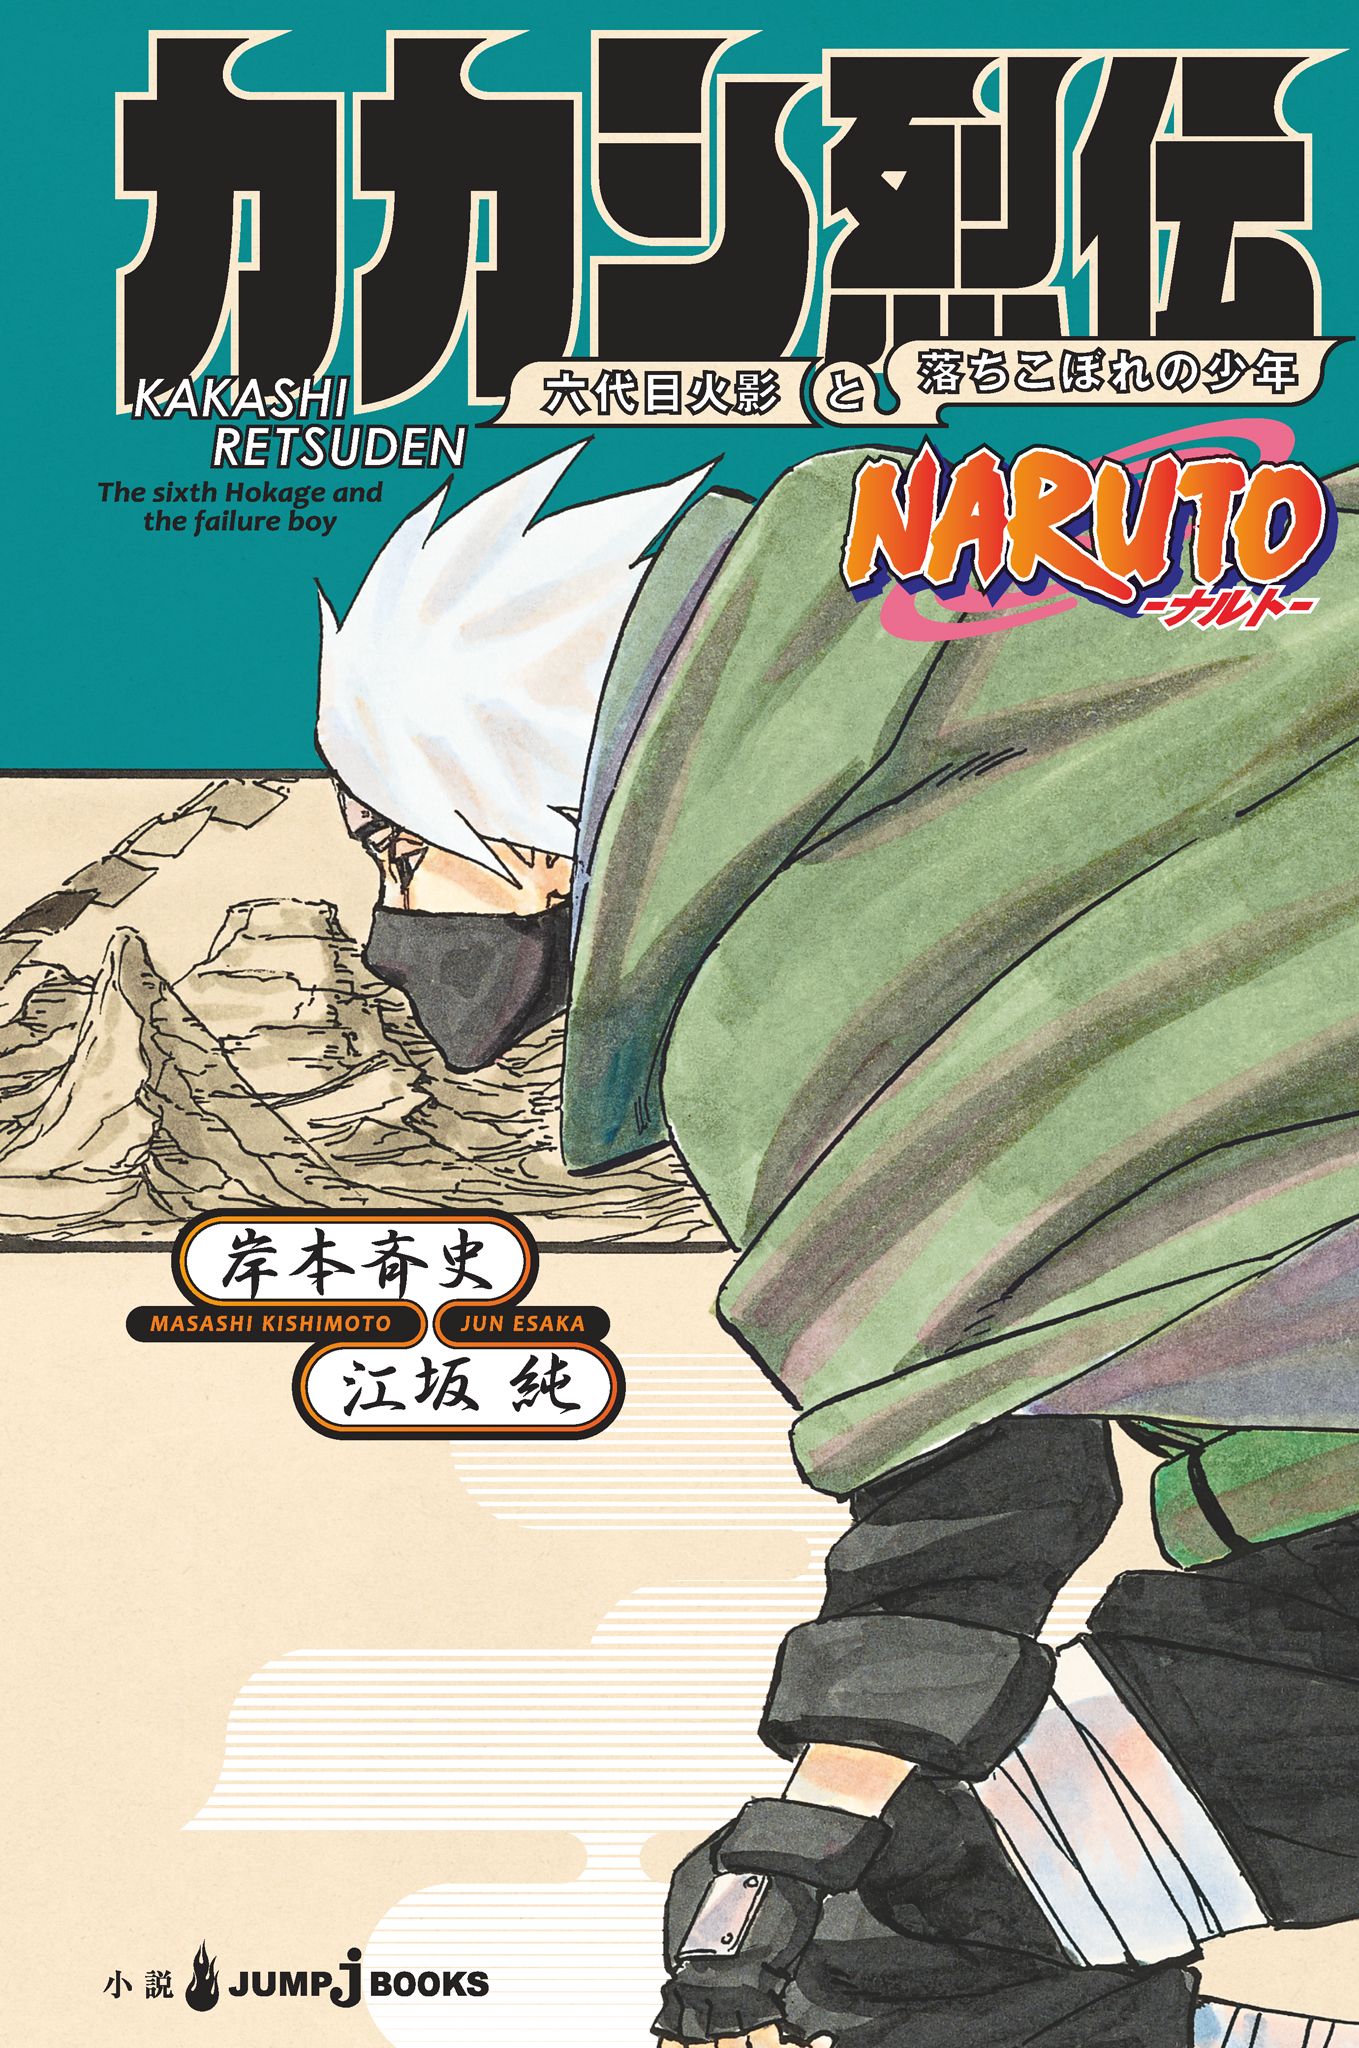 Naruto ナルト カカシ烈伝 六代目火影と落ちこぼれの少年 漫画 無料試し読みなら 電子書籍ストア ブックライブ